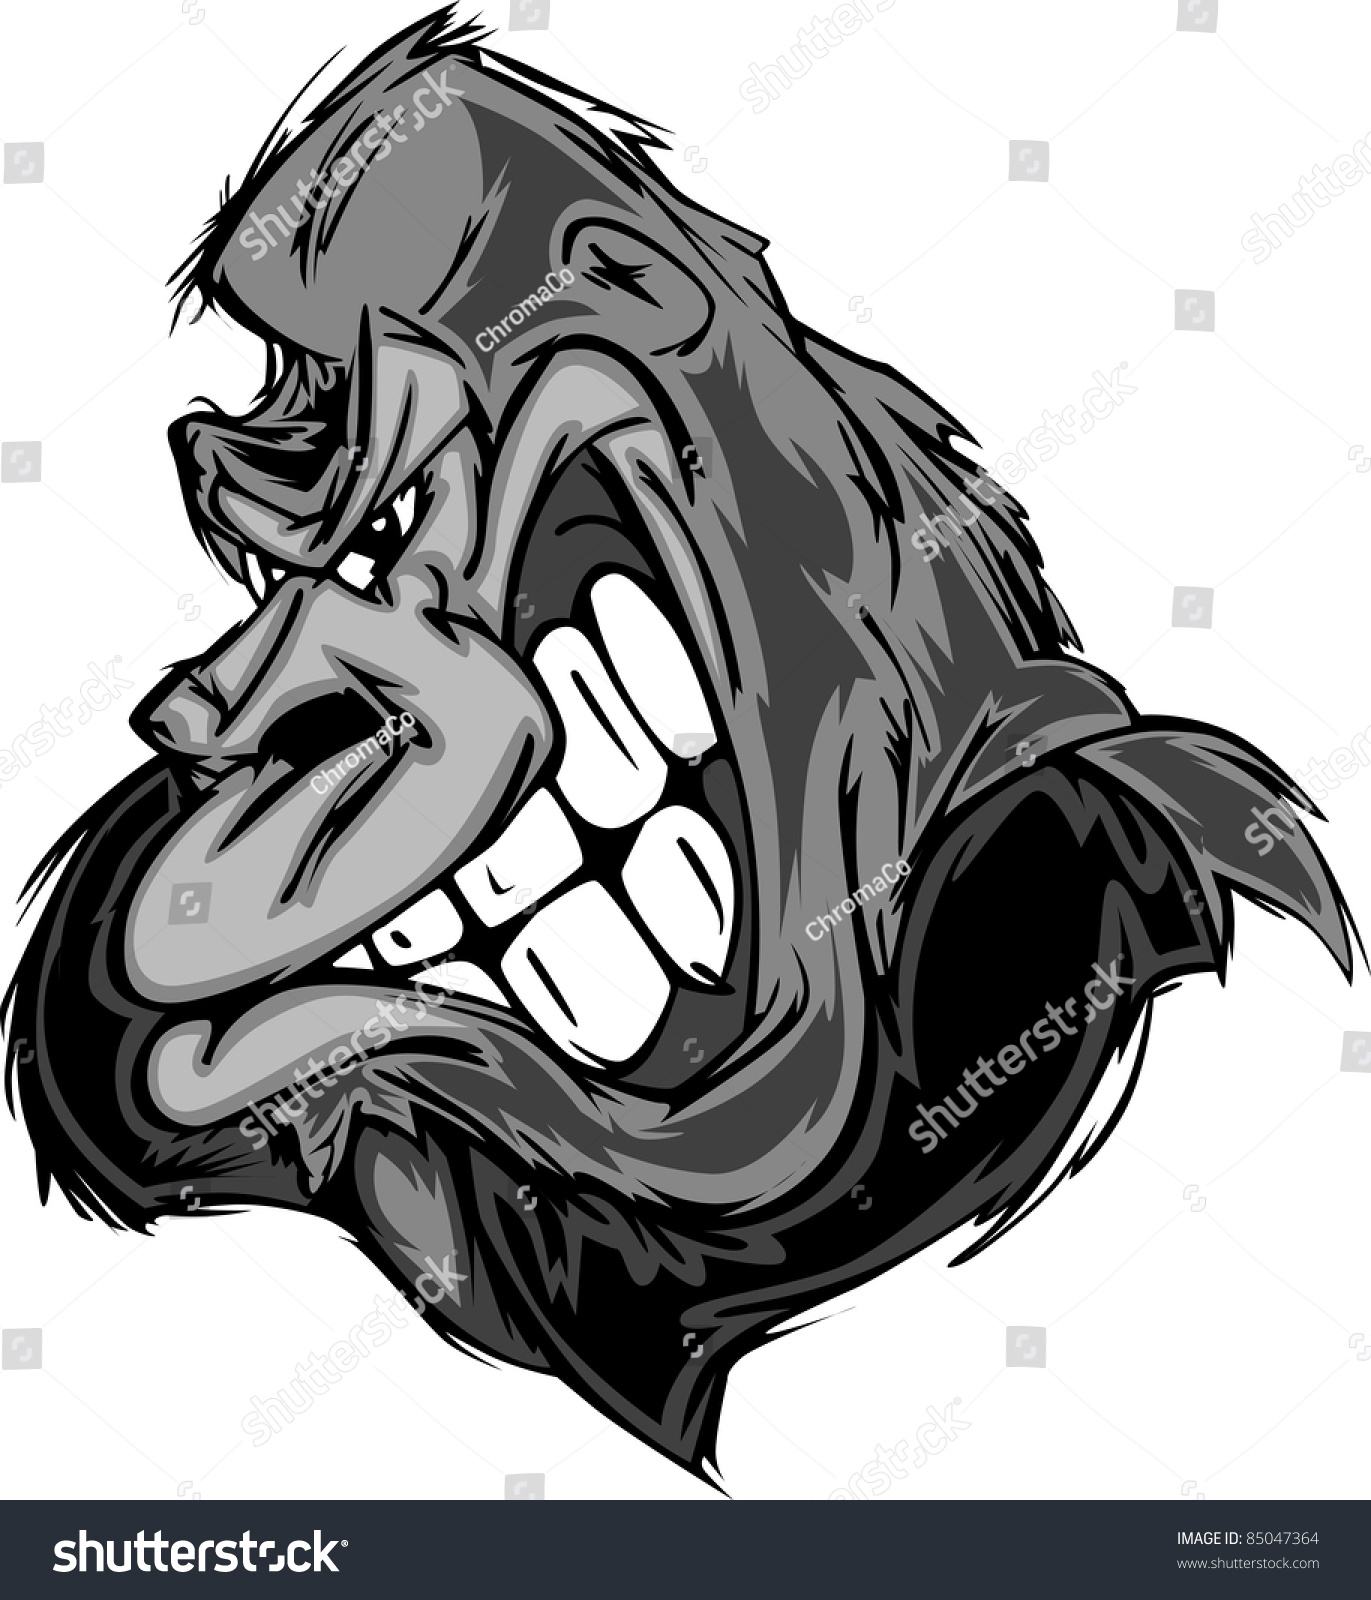 Gorilla Or Ape Mascot Cartoon Stock Vector 85047364 : Shutterstock